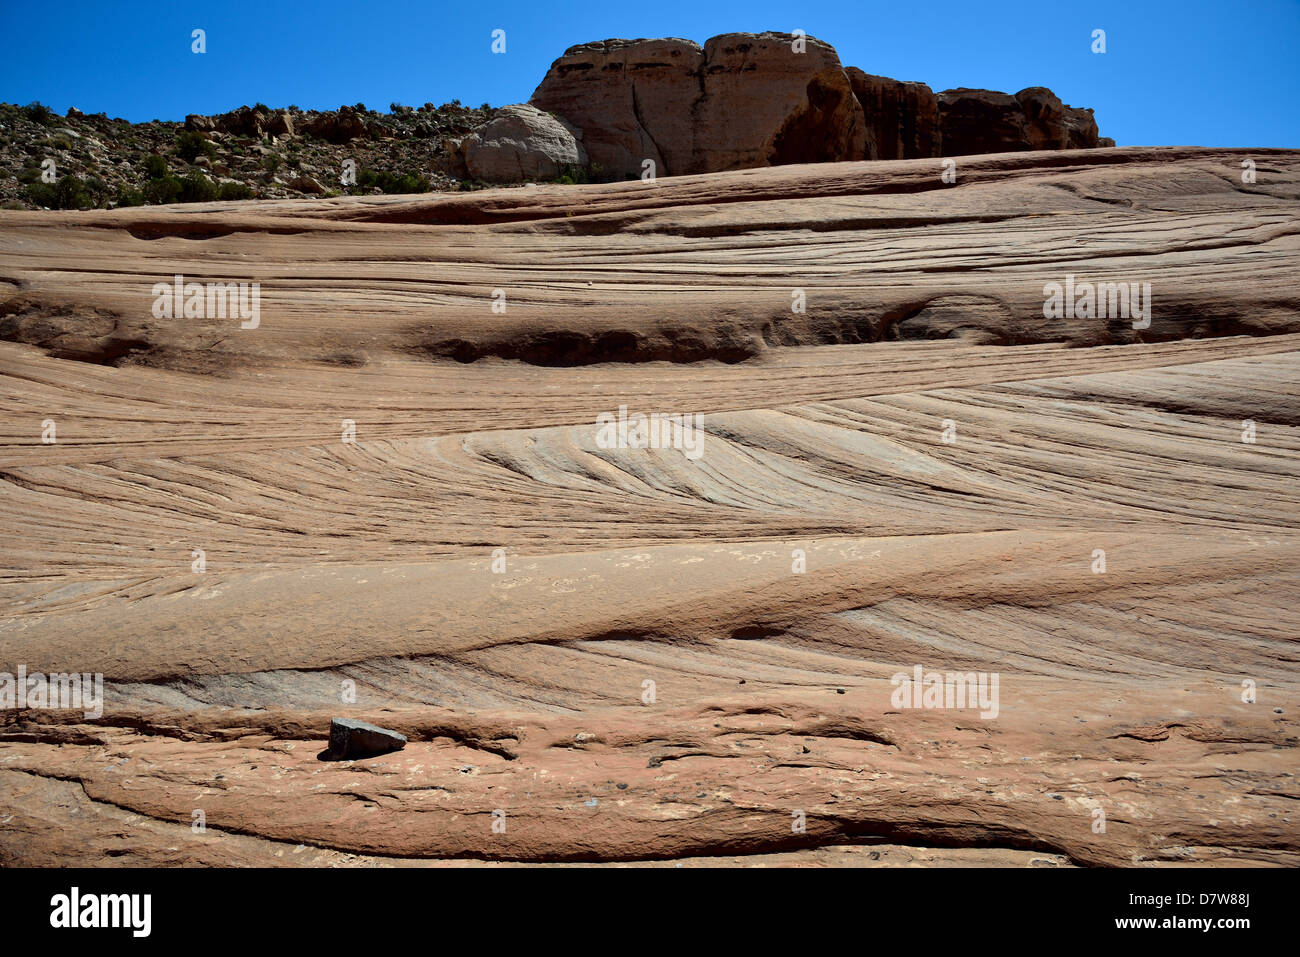 Cross-beds in eolian sandstone. Moab, Utah, USA. Stock Photo